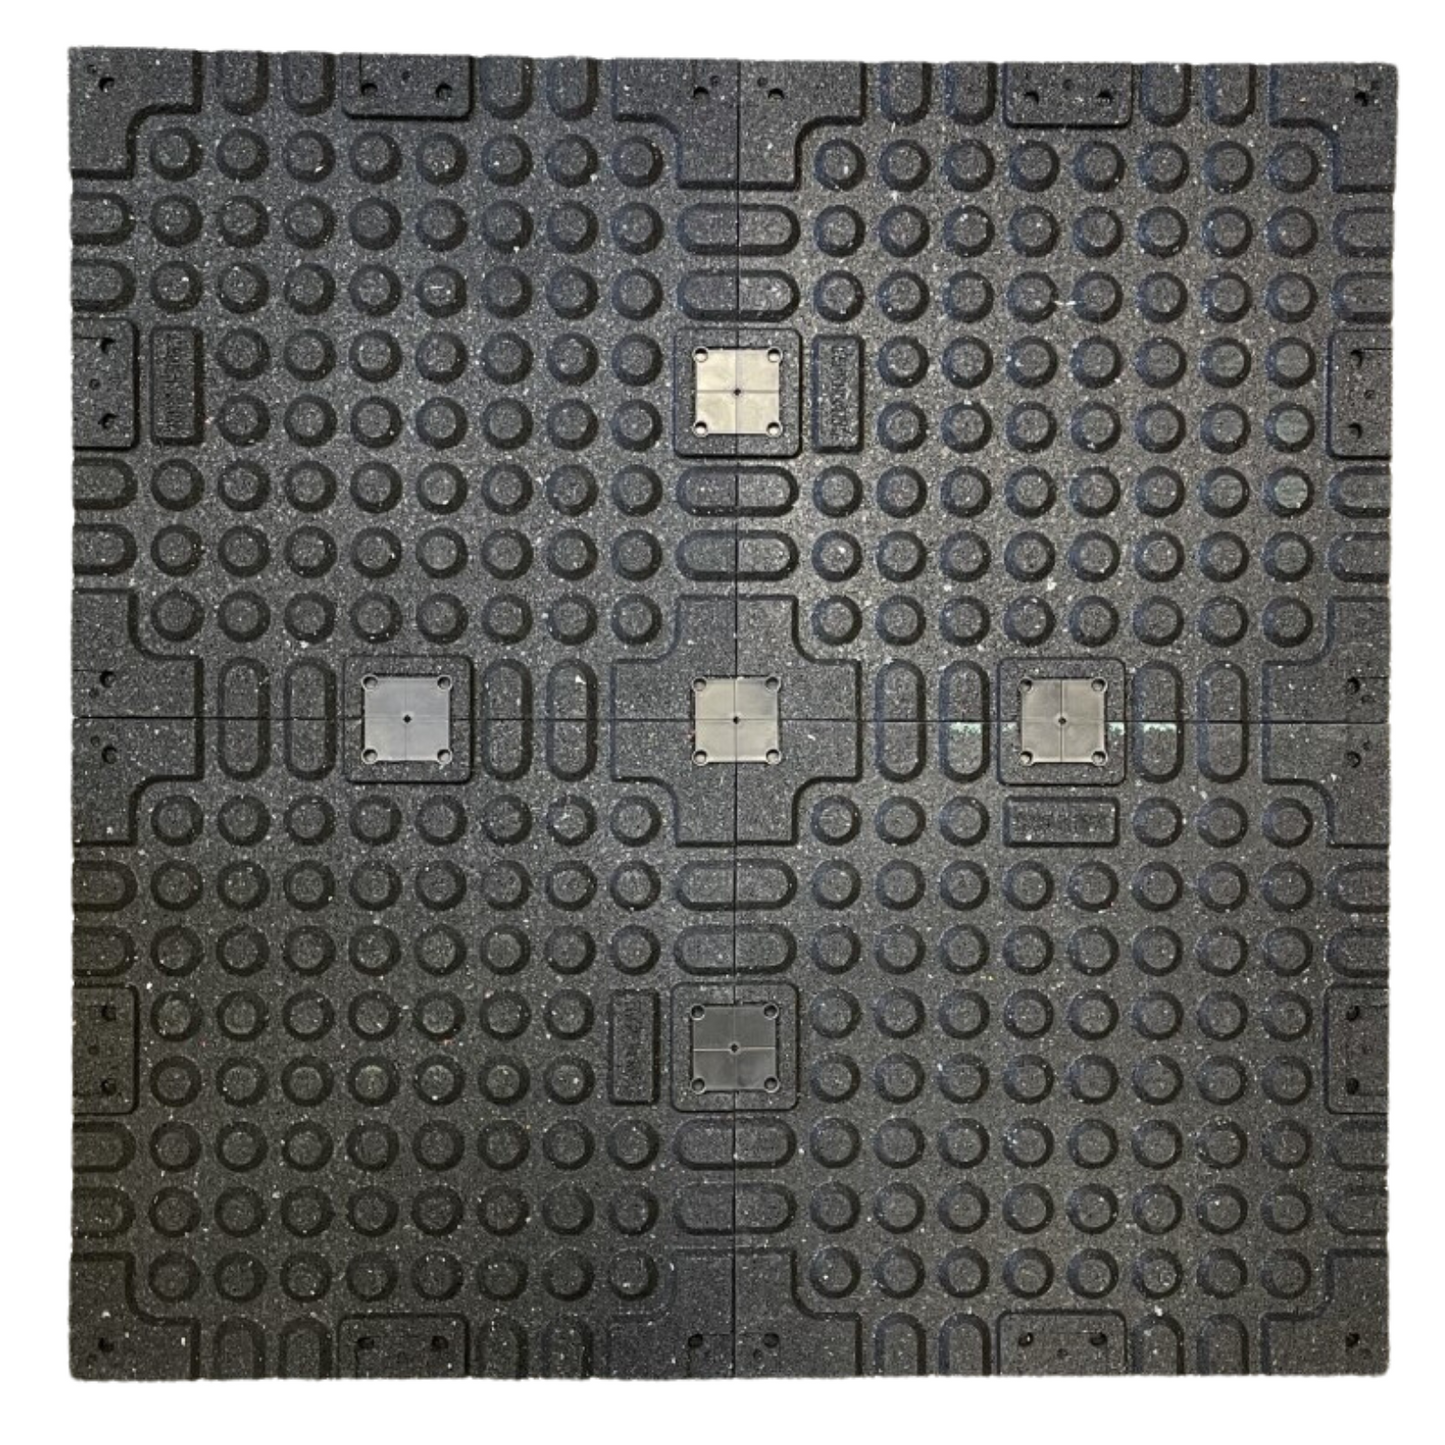 Exersci® Premium Red Speckled Rubber Tiles with Connectors 100cm x 100cm